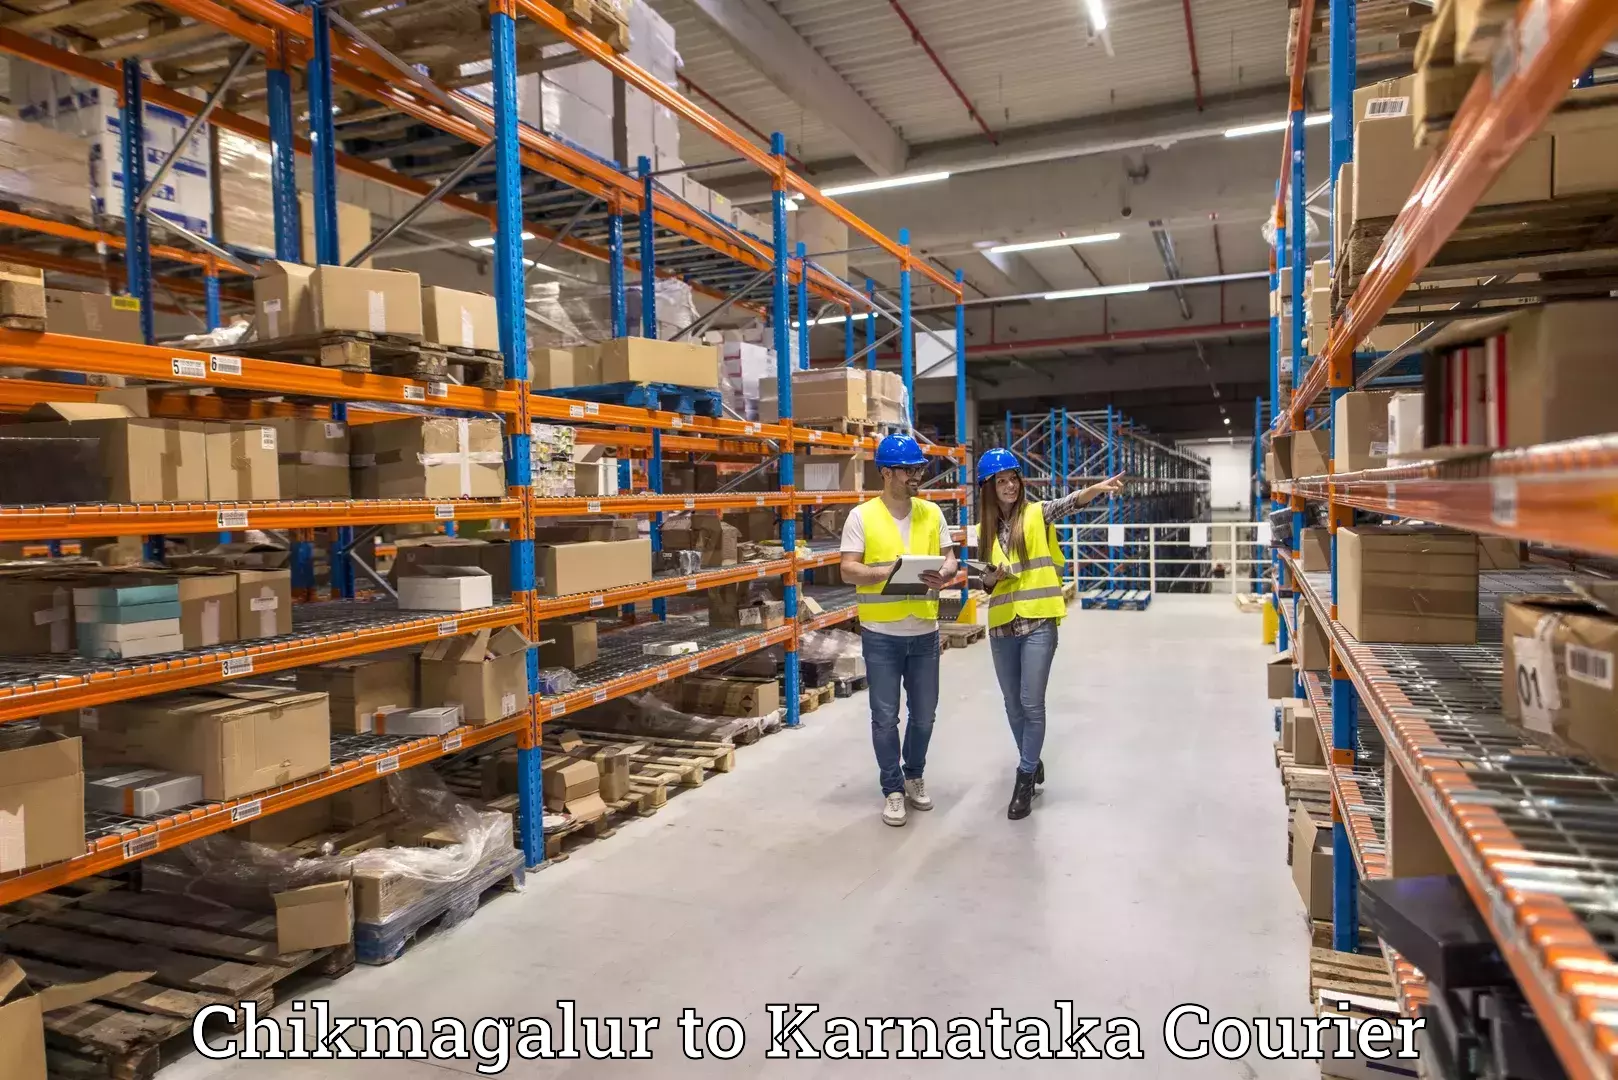 Global shipping networks Chikmagalur to Karnataka